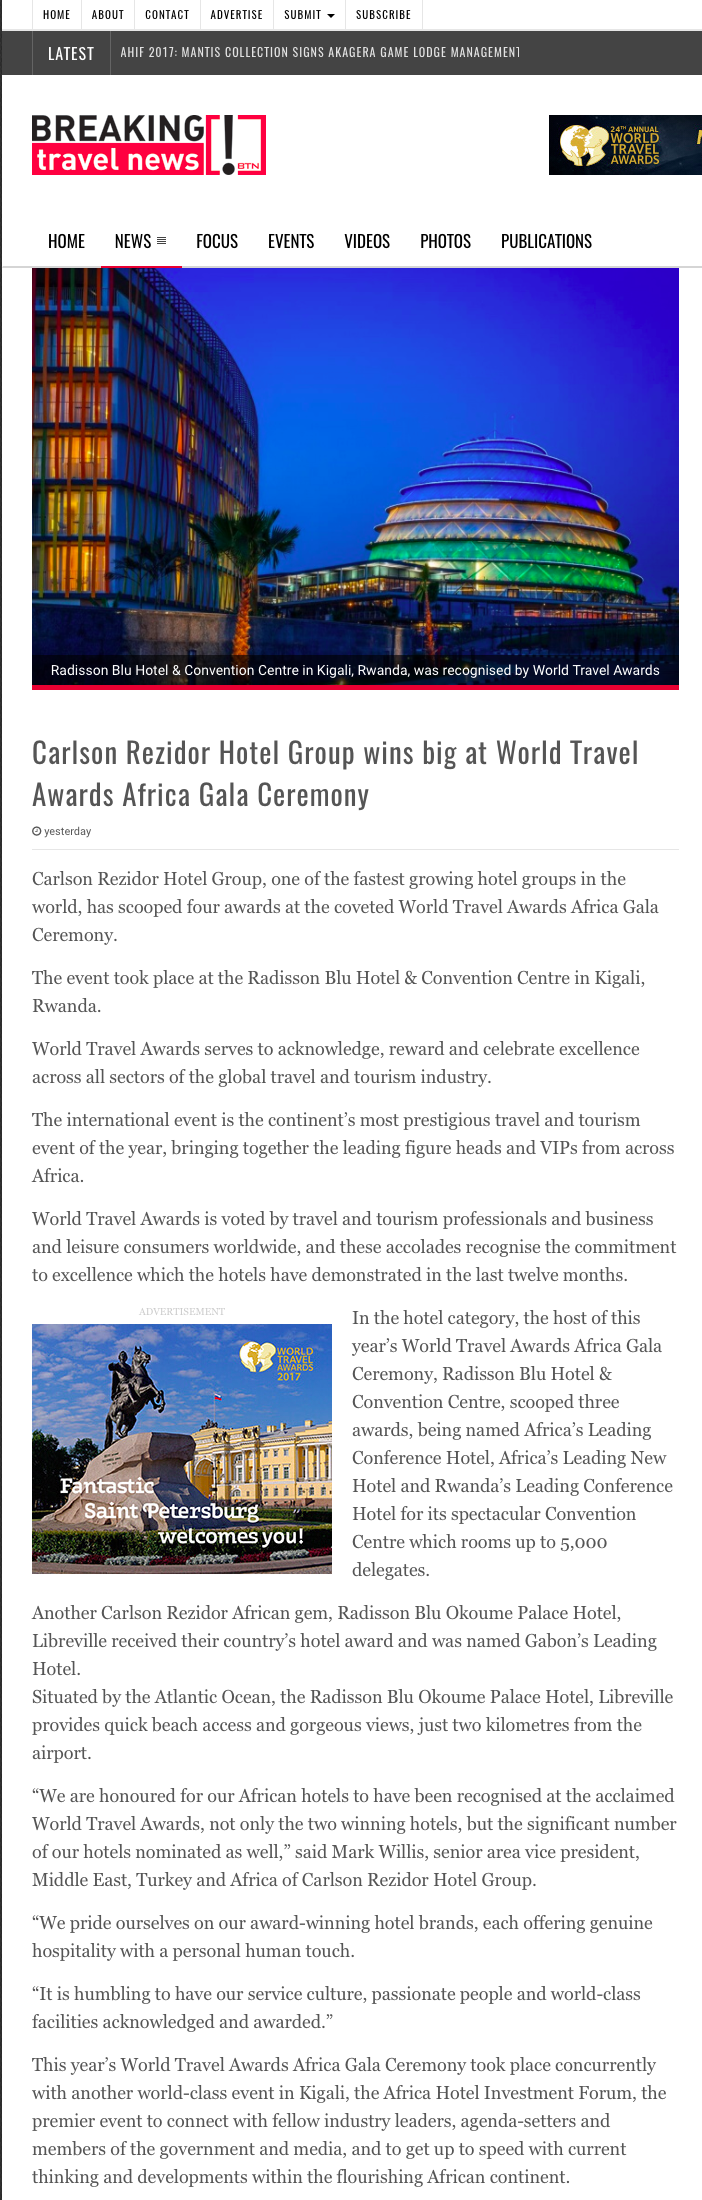 Carlson Rezidor Hotel Group wins big at World Travel Awards Africa Gala Ceremony